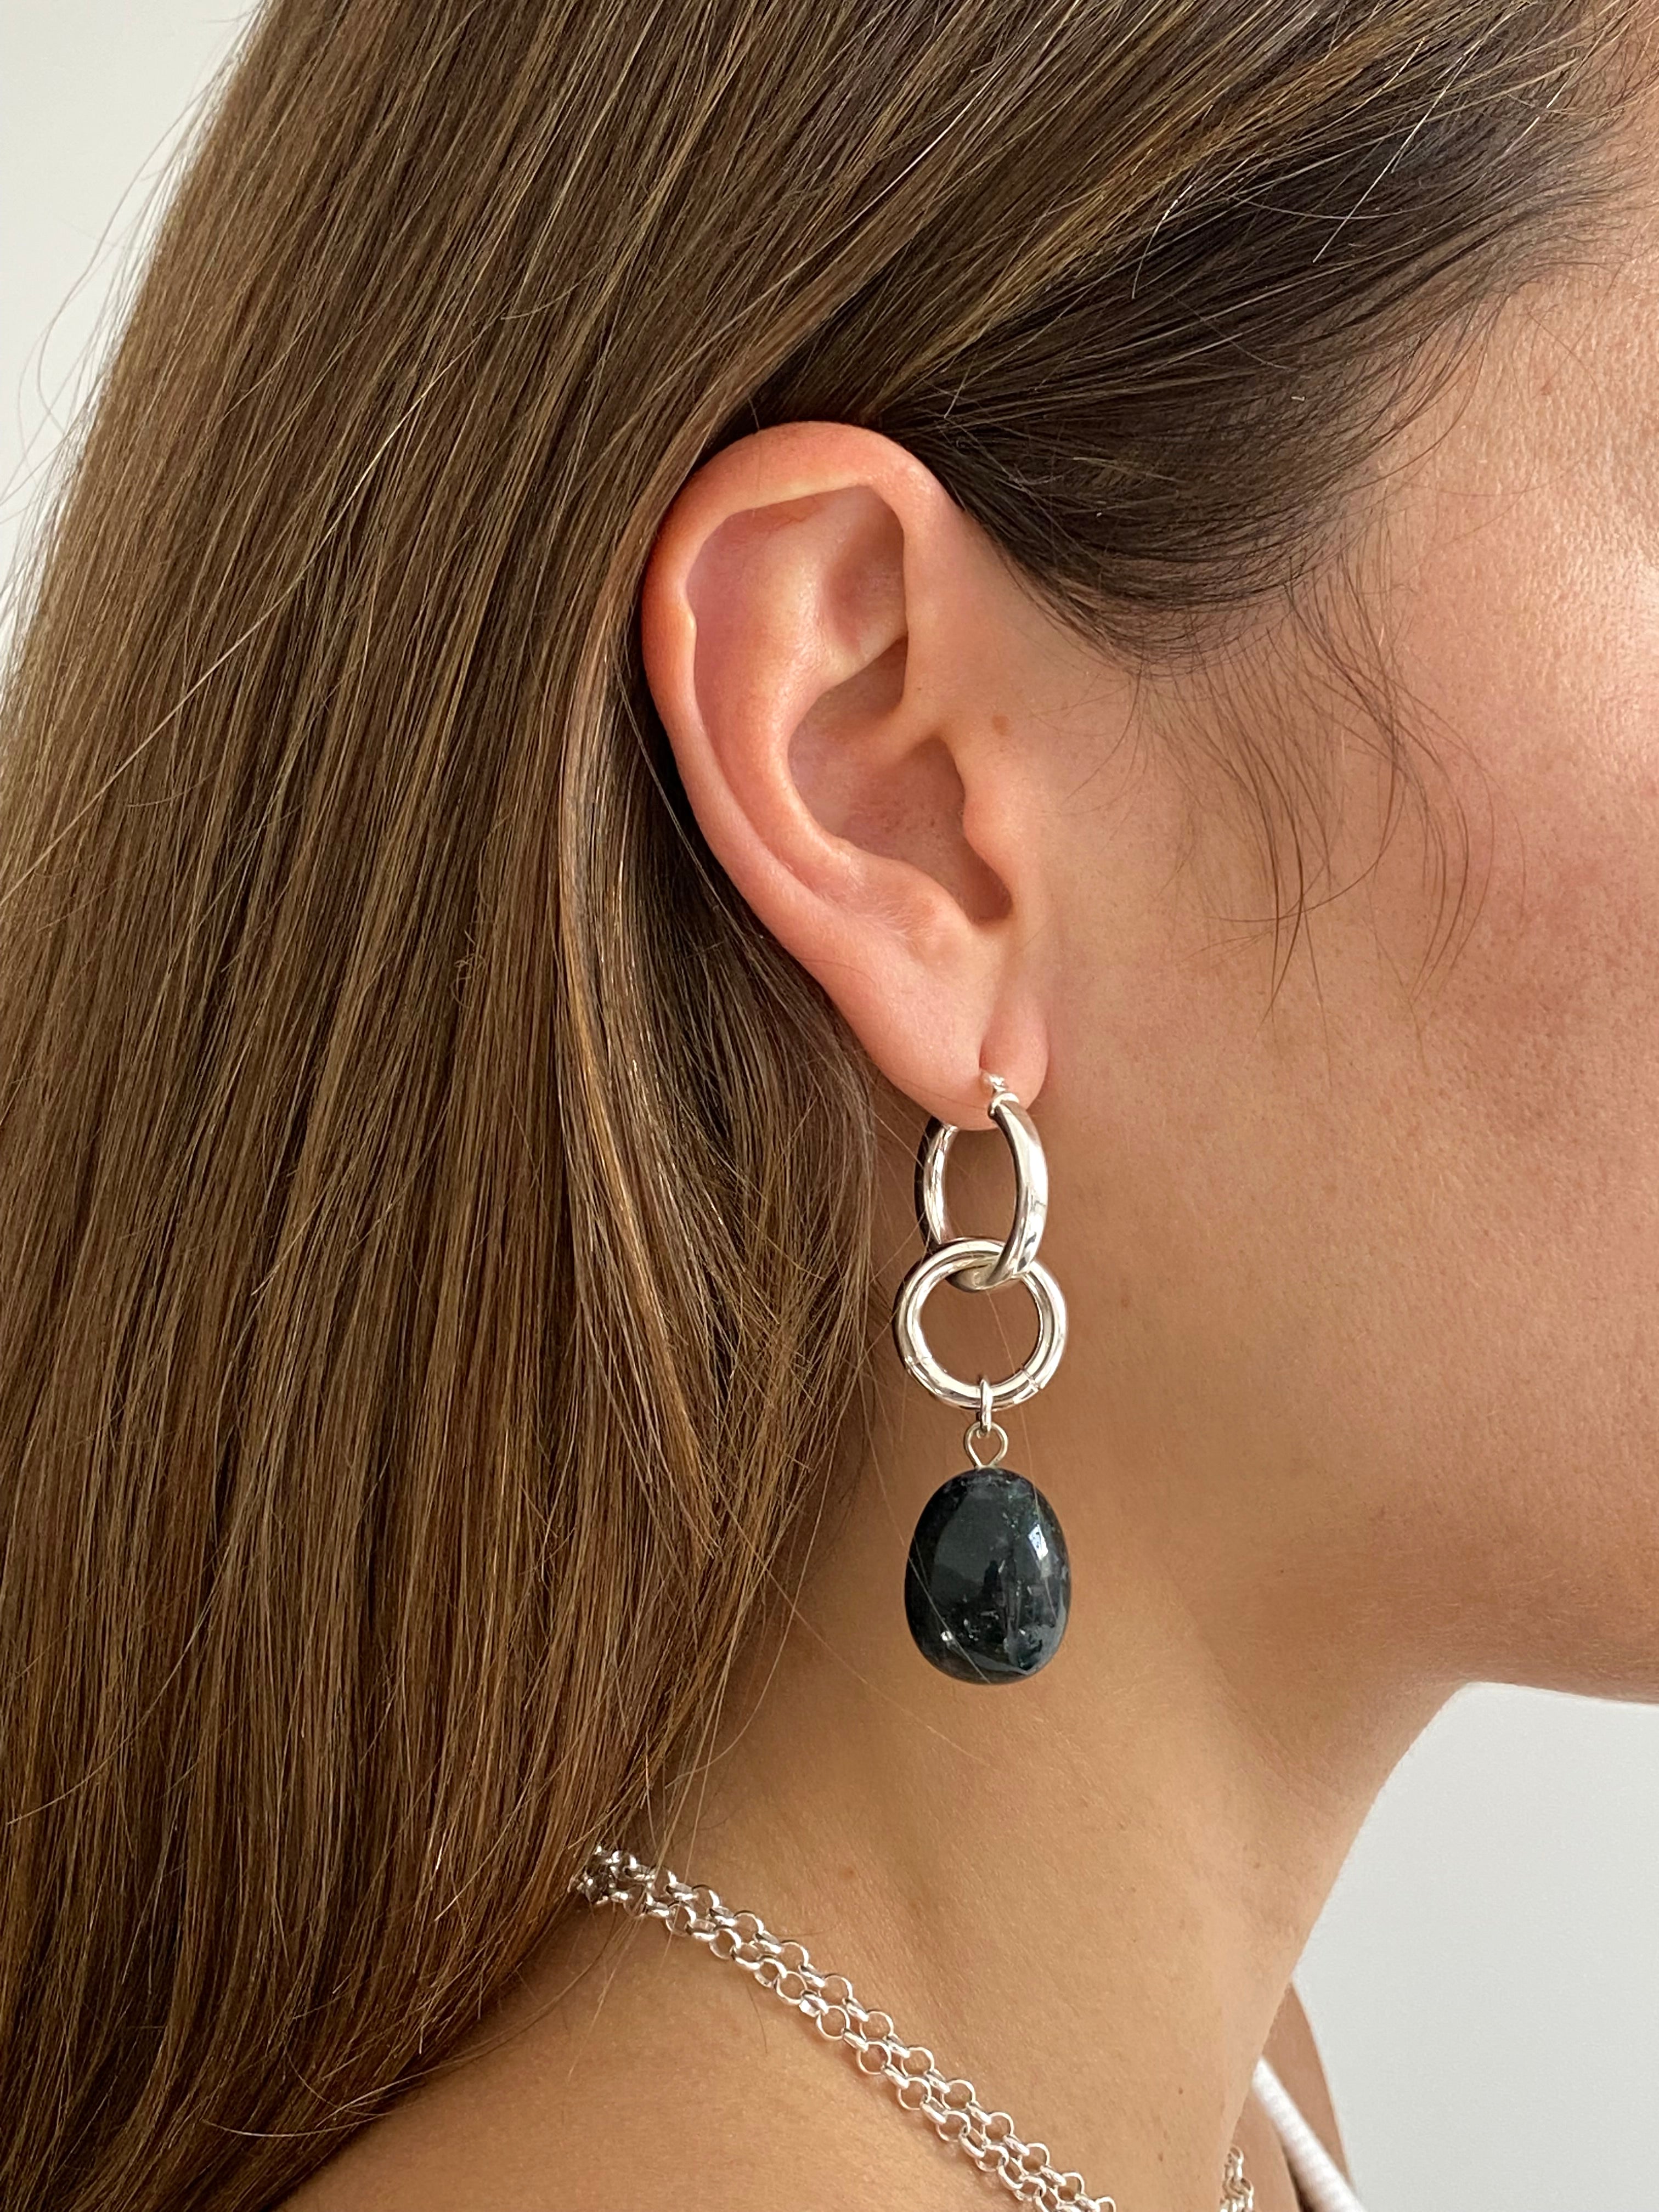 llayers minimal Silver Moss Agate stone hoops earrings Made in Brooklyn New York